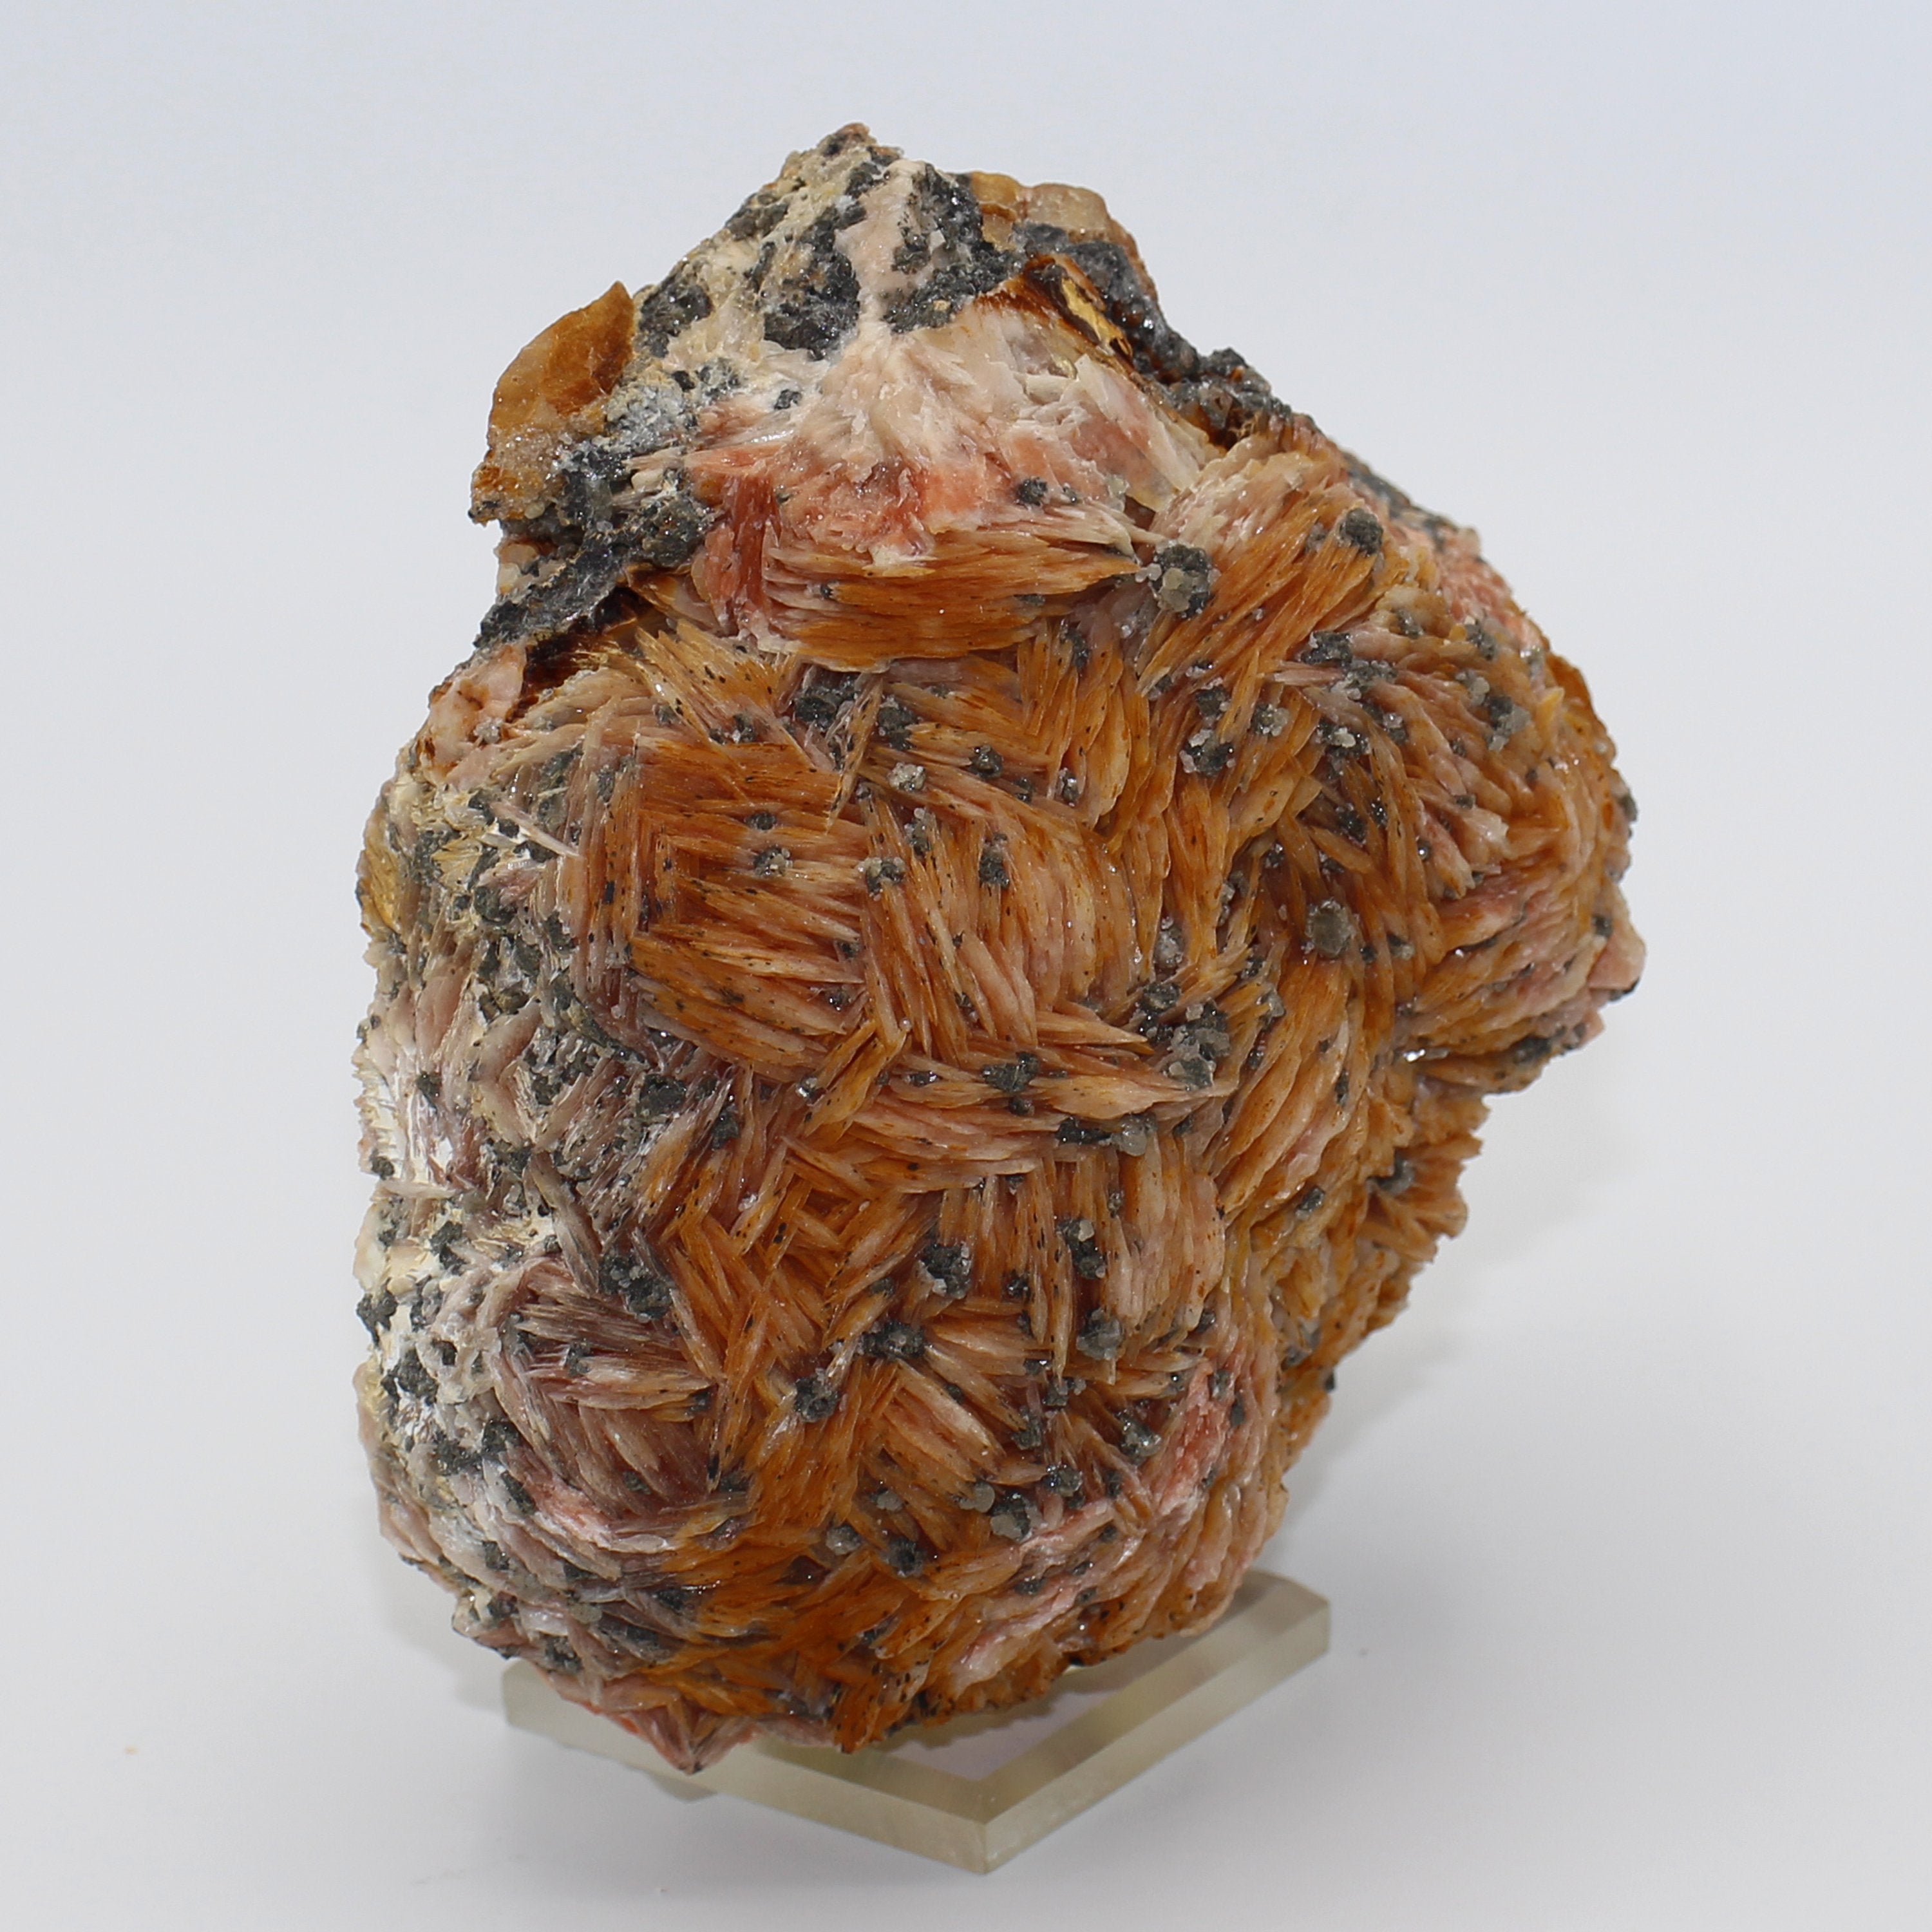 Very Fine Orange Barite with Pyrite and Sphalerite with Dolomite Matrix from Morocco - The Rutile Ltd